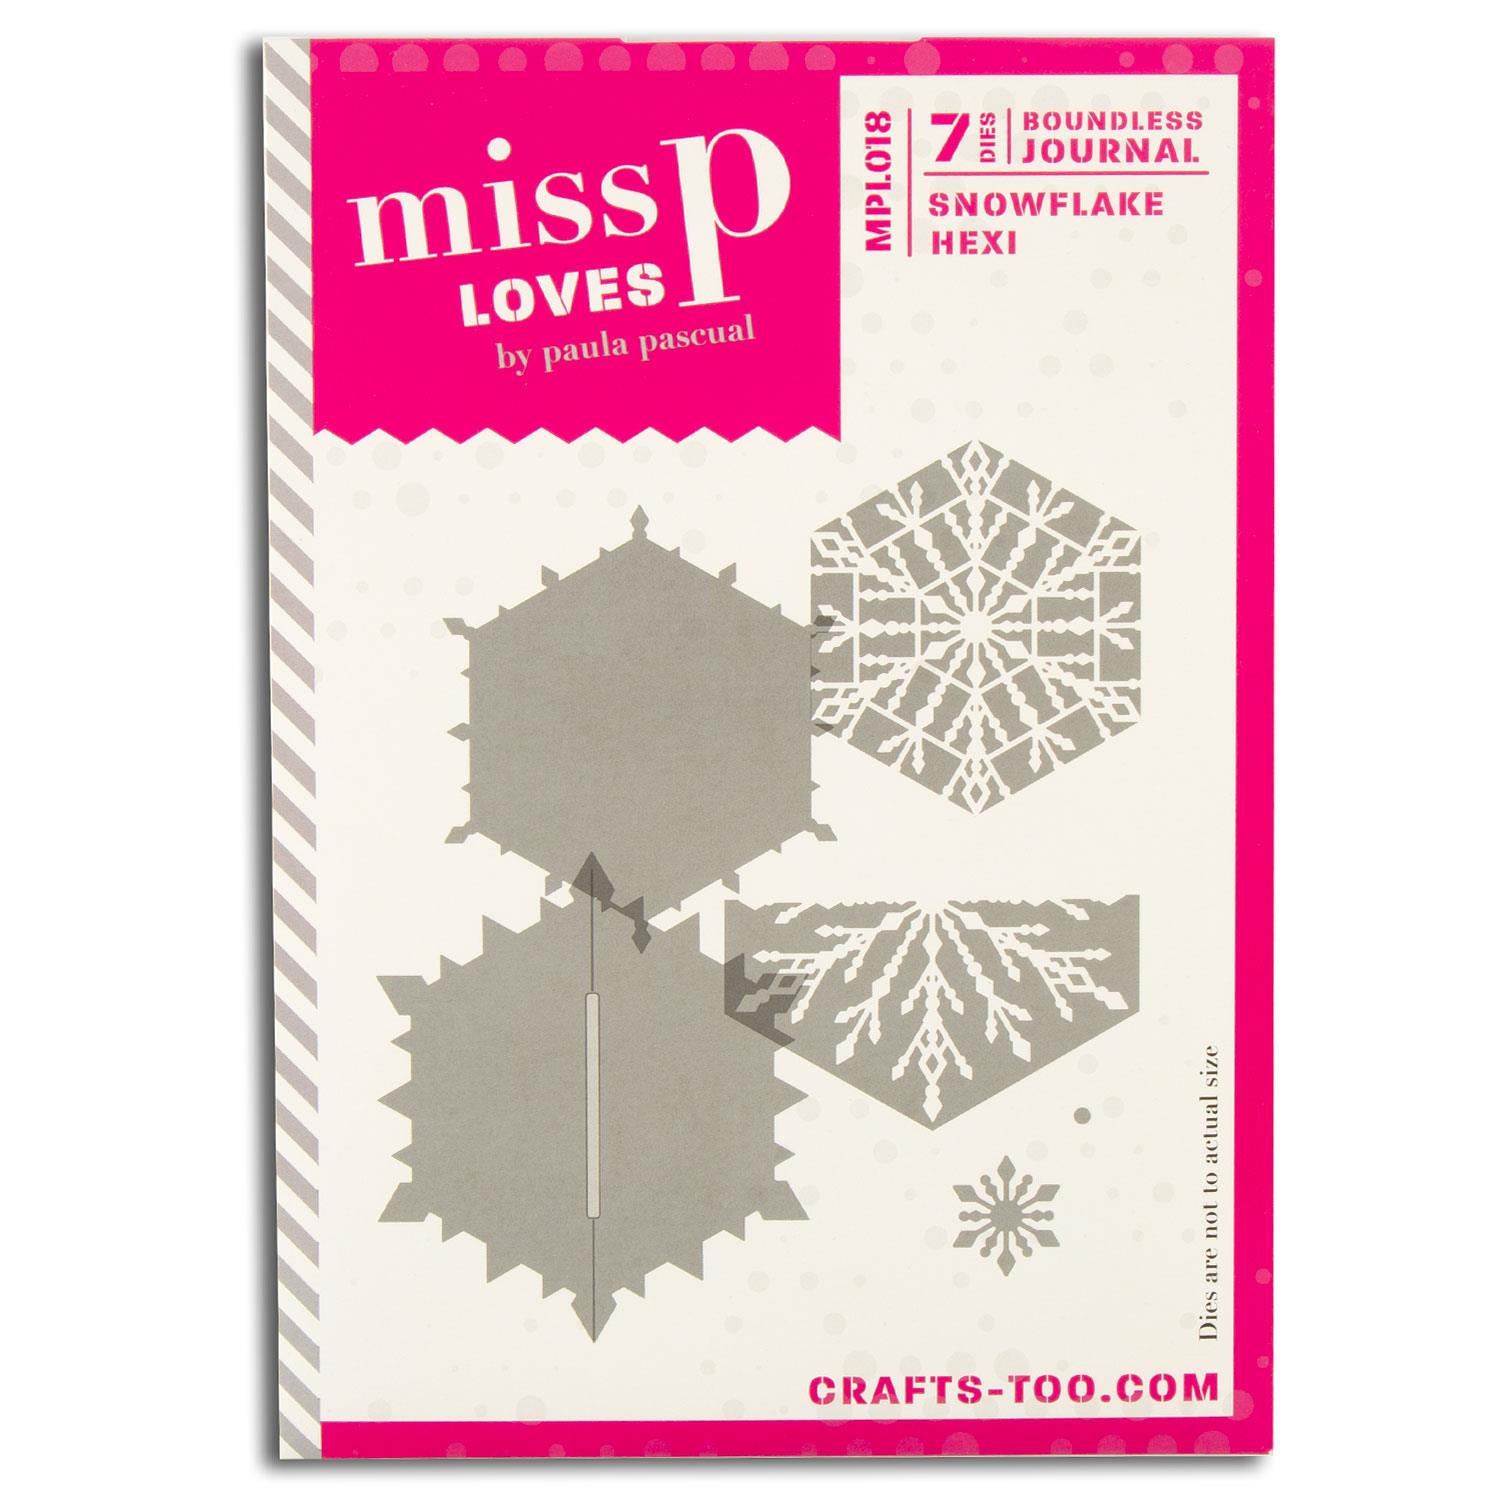 Miss P Loves Boundless Journal - Snowflake Hexi (7pcs)